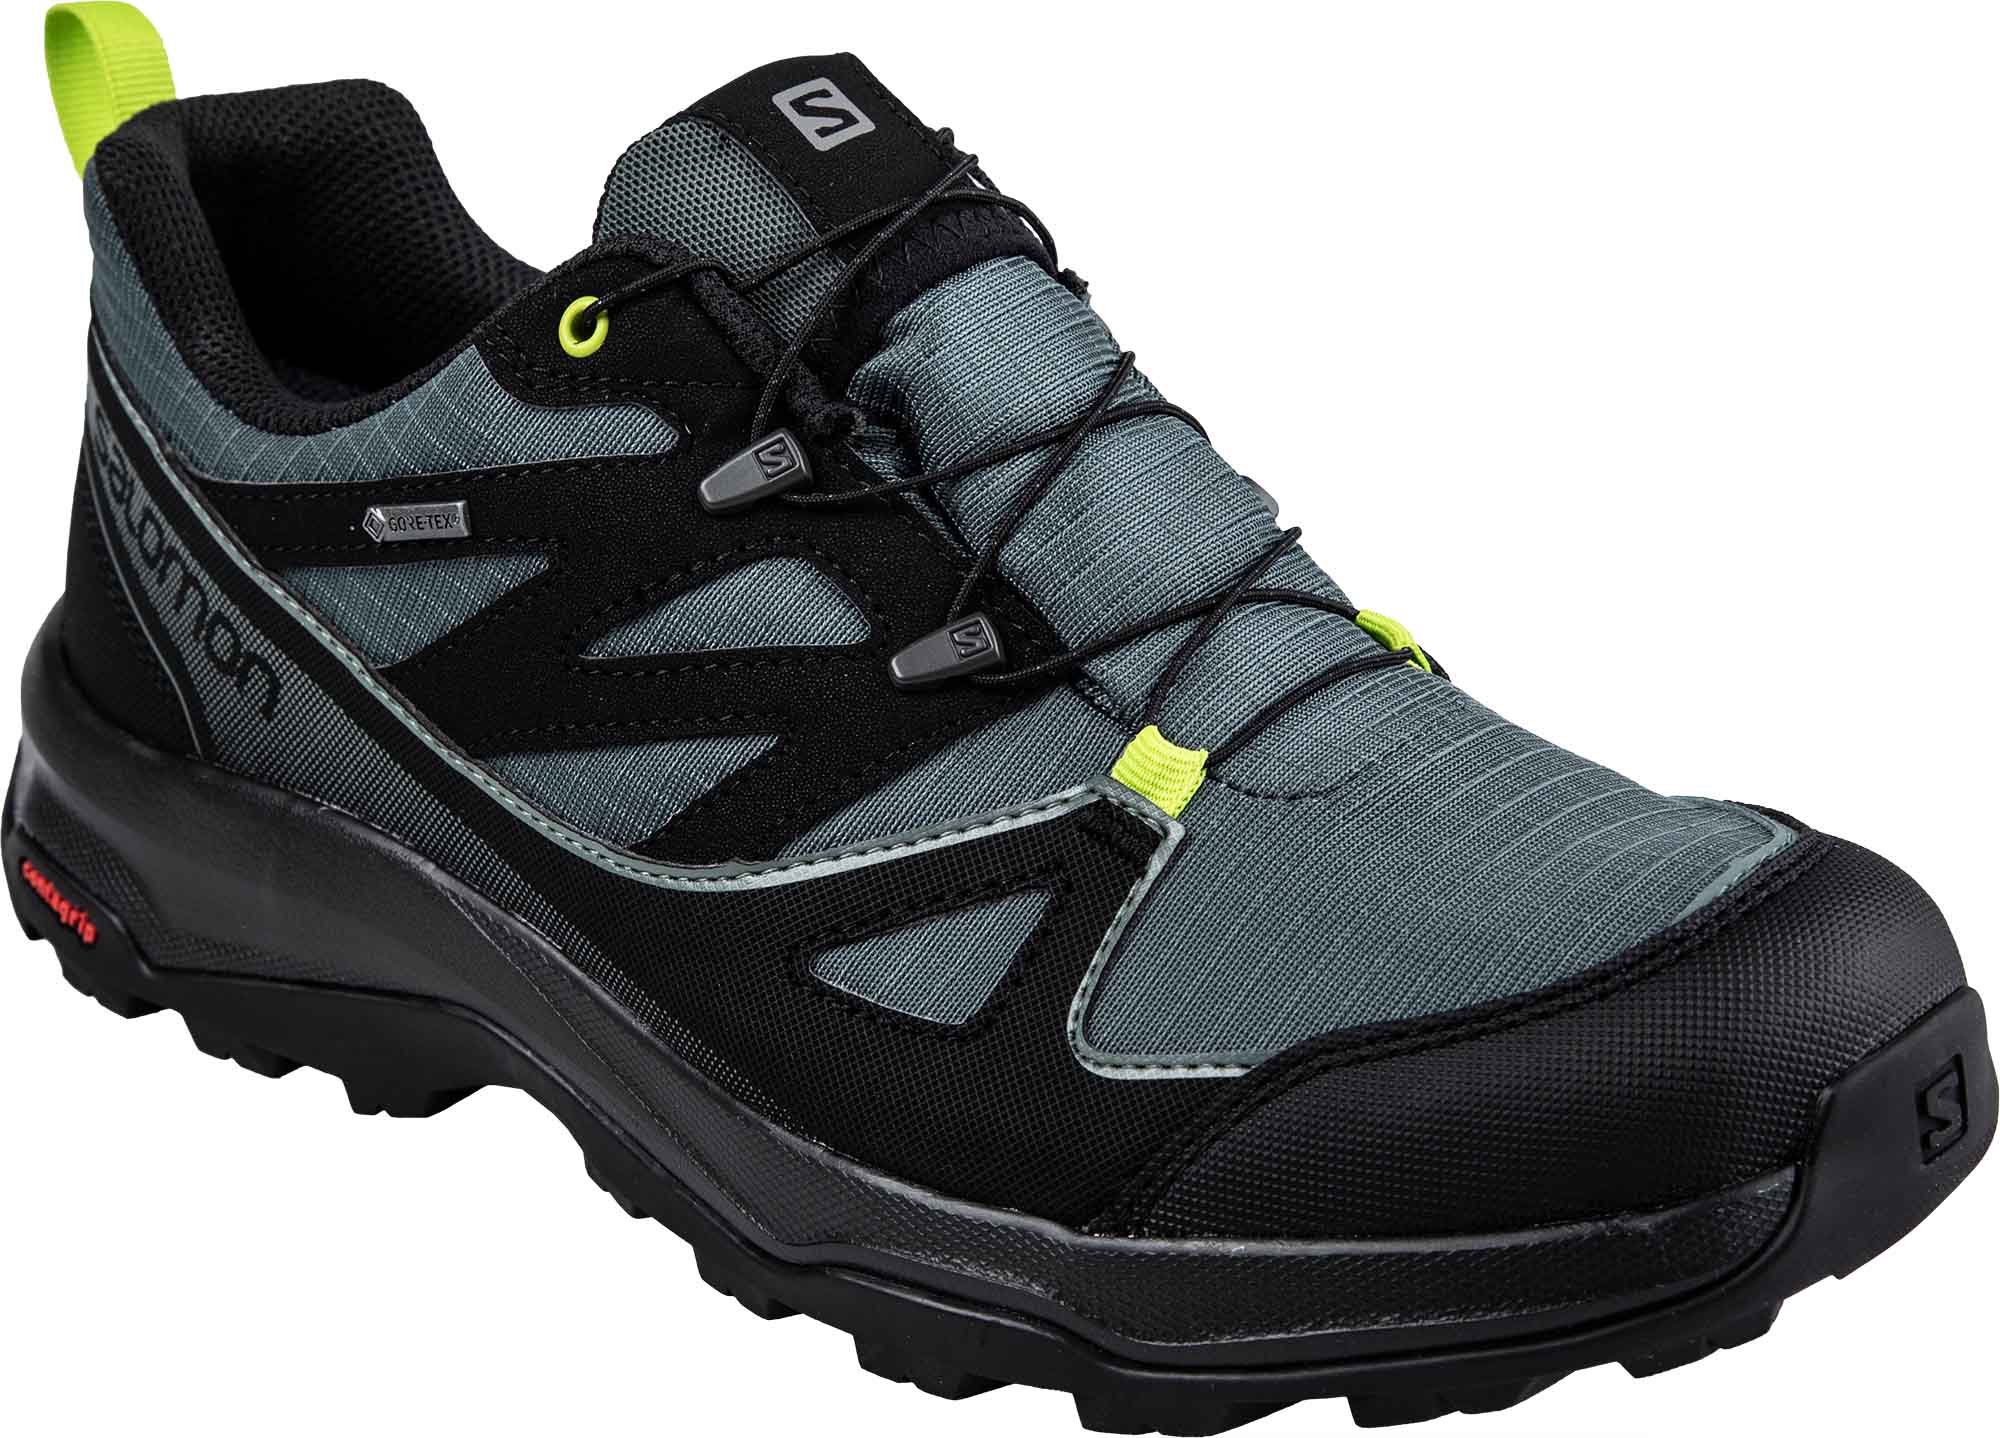 Men's hiking shoes